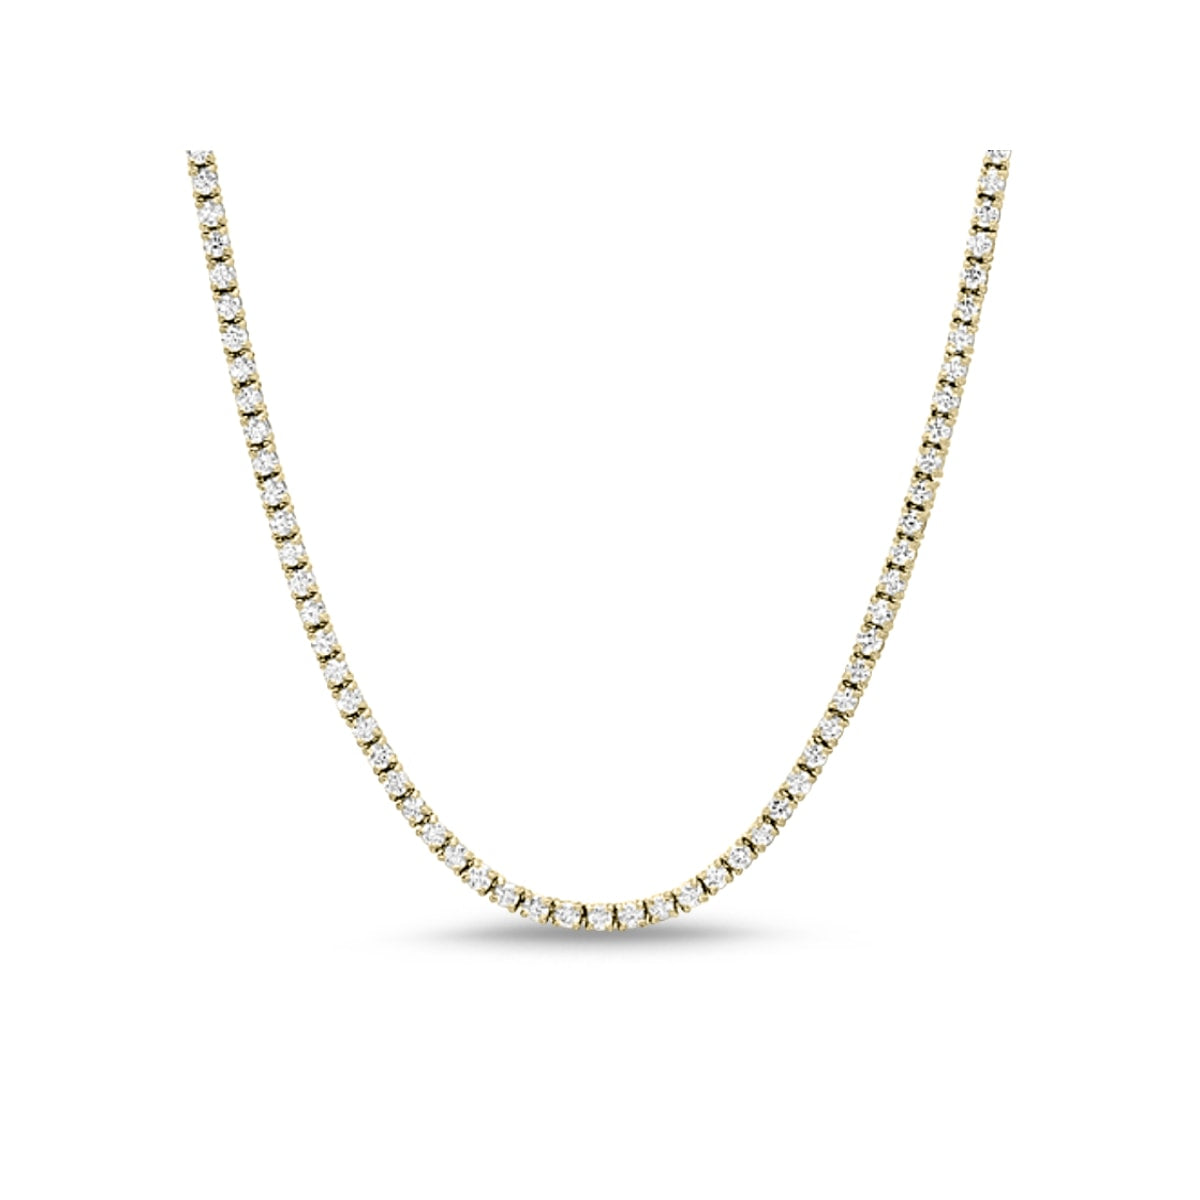 Monette 4 Prong Diamond Necklace in 18k Gold Vermeil